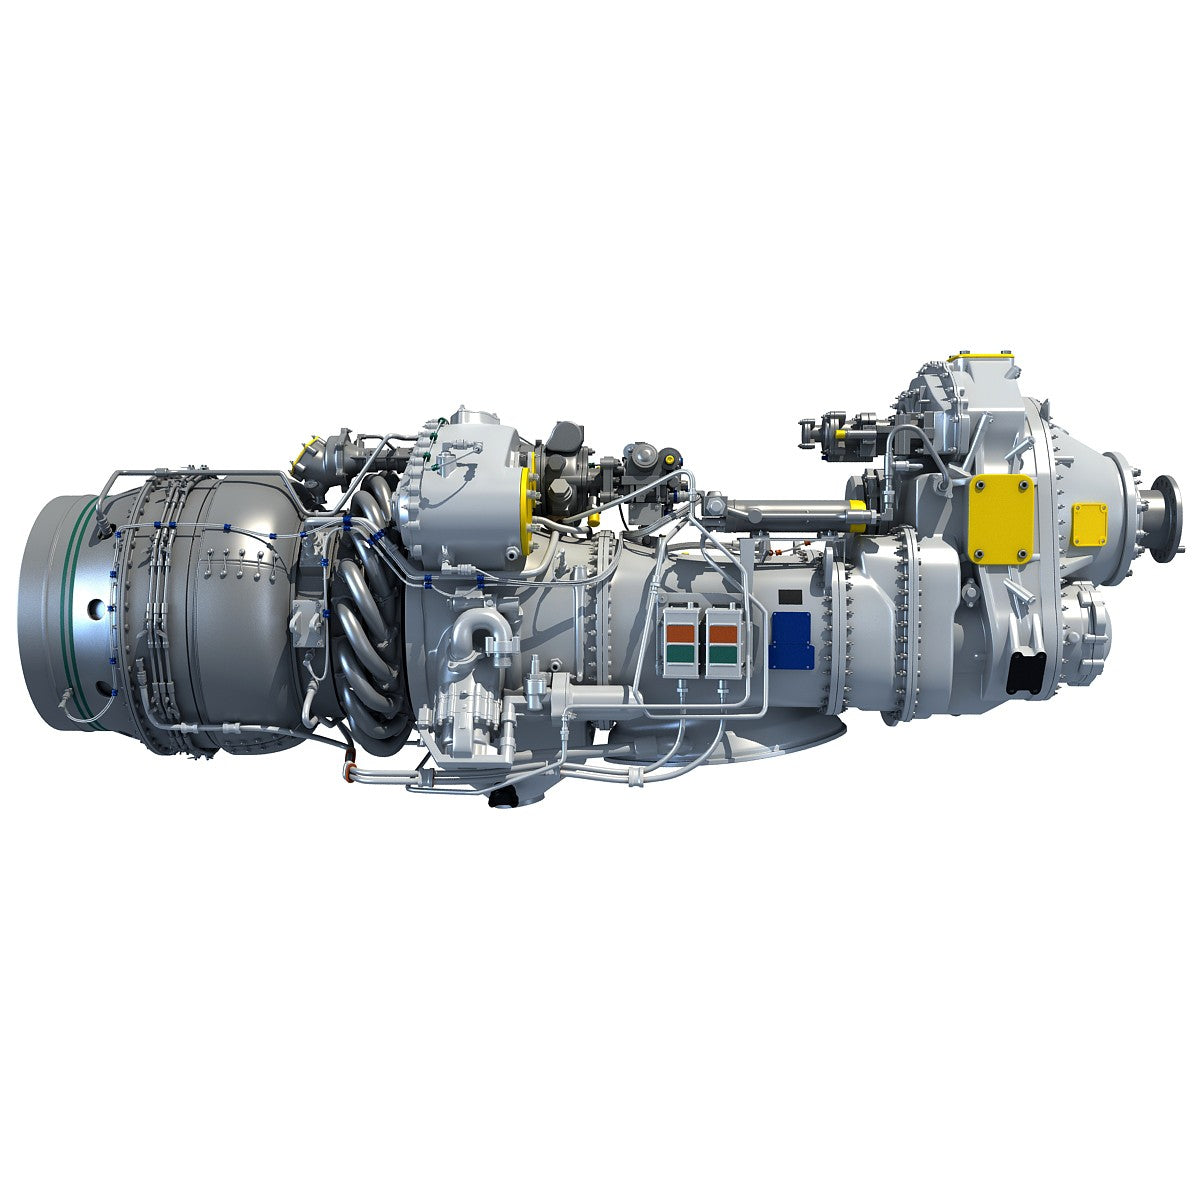 Pratt & Whitney Turboprop 3D Engine Model